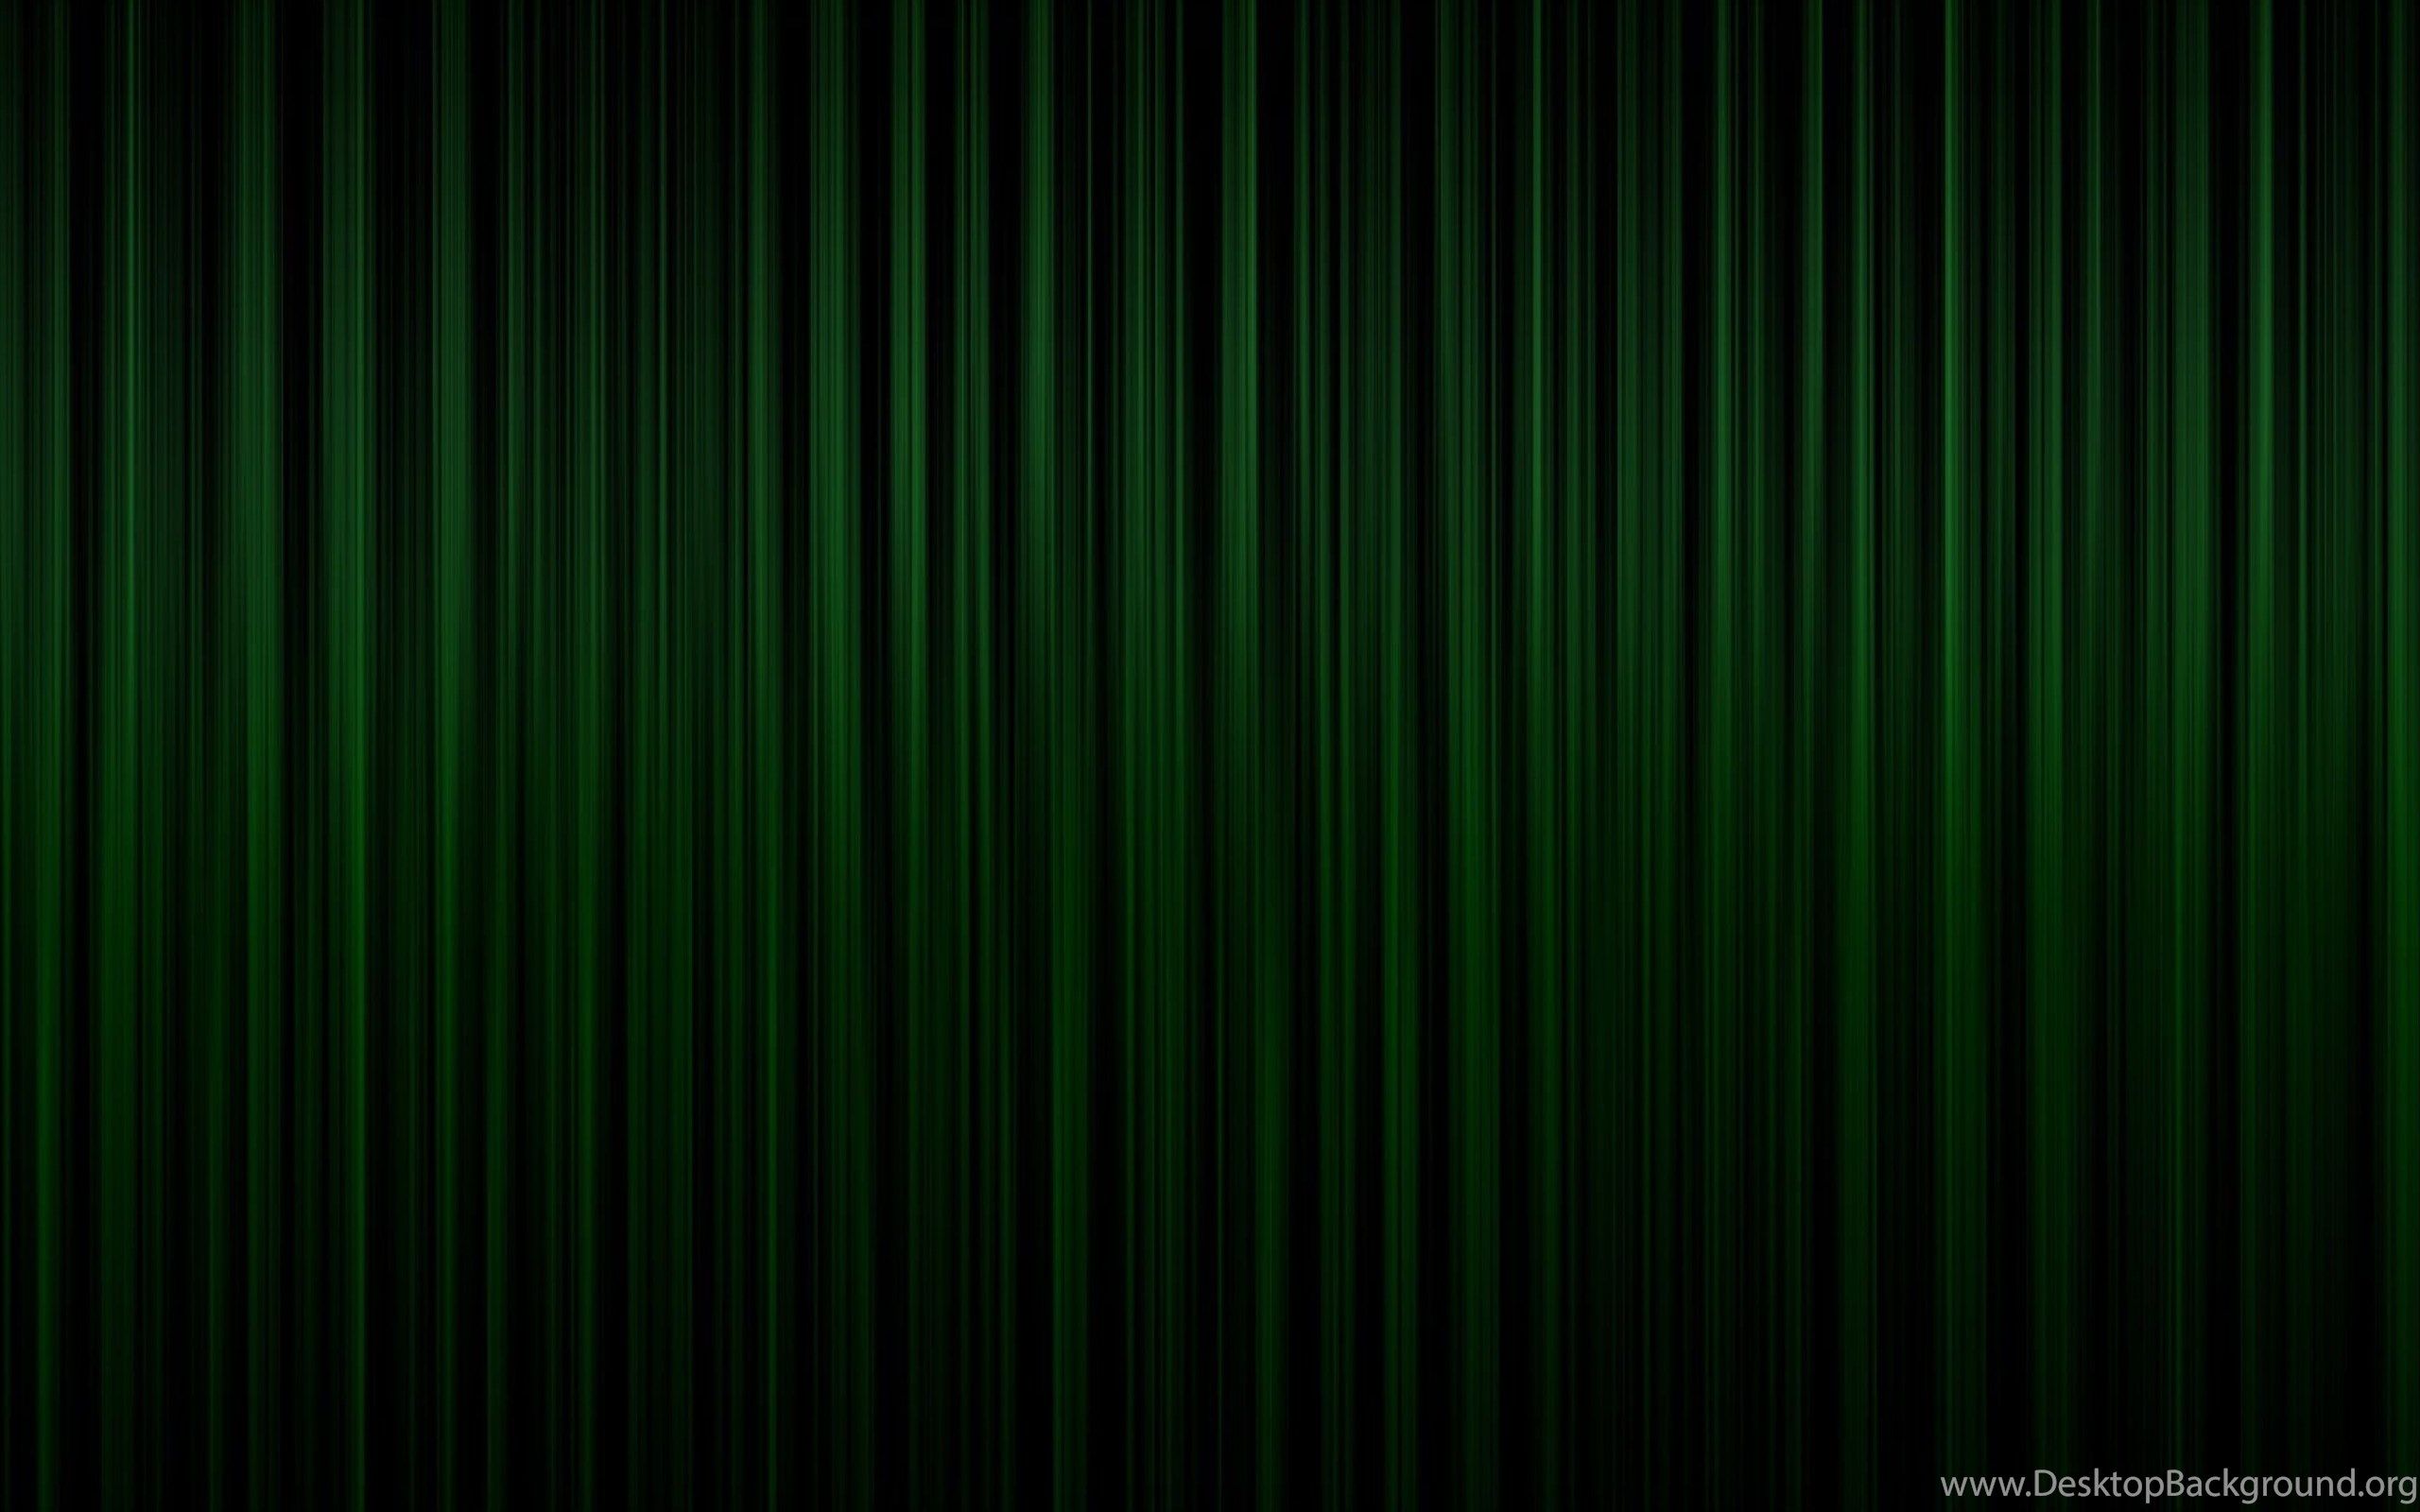 4K Ultra HD Green Wallpaper HD, Desktop Background 3840x2160. Desktop Background